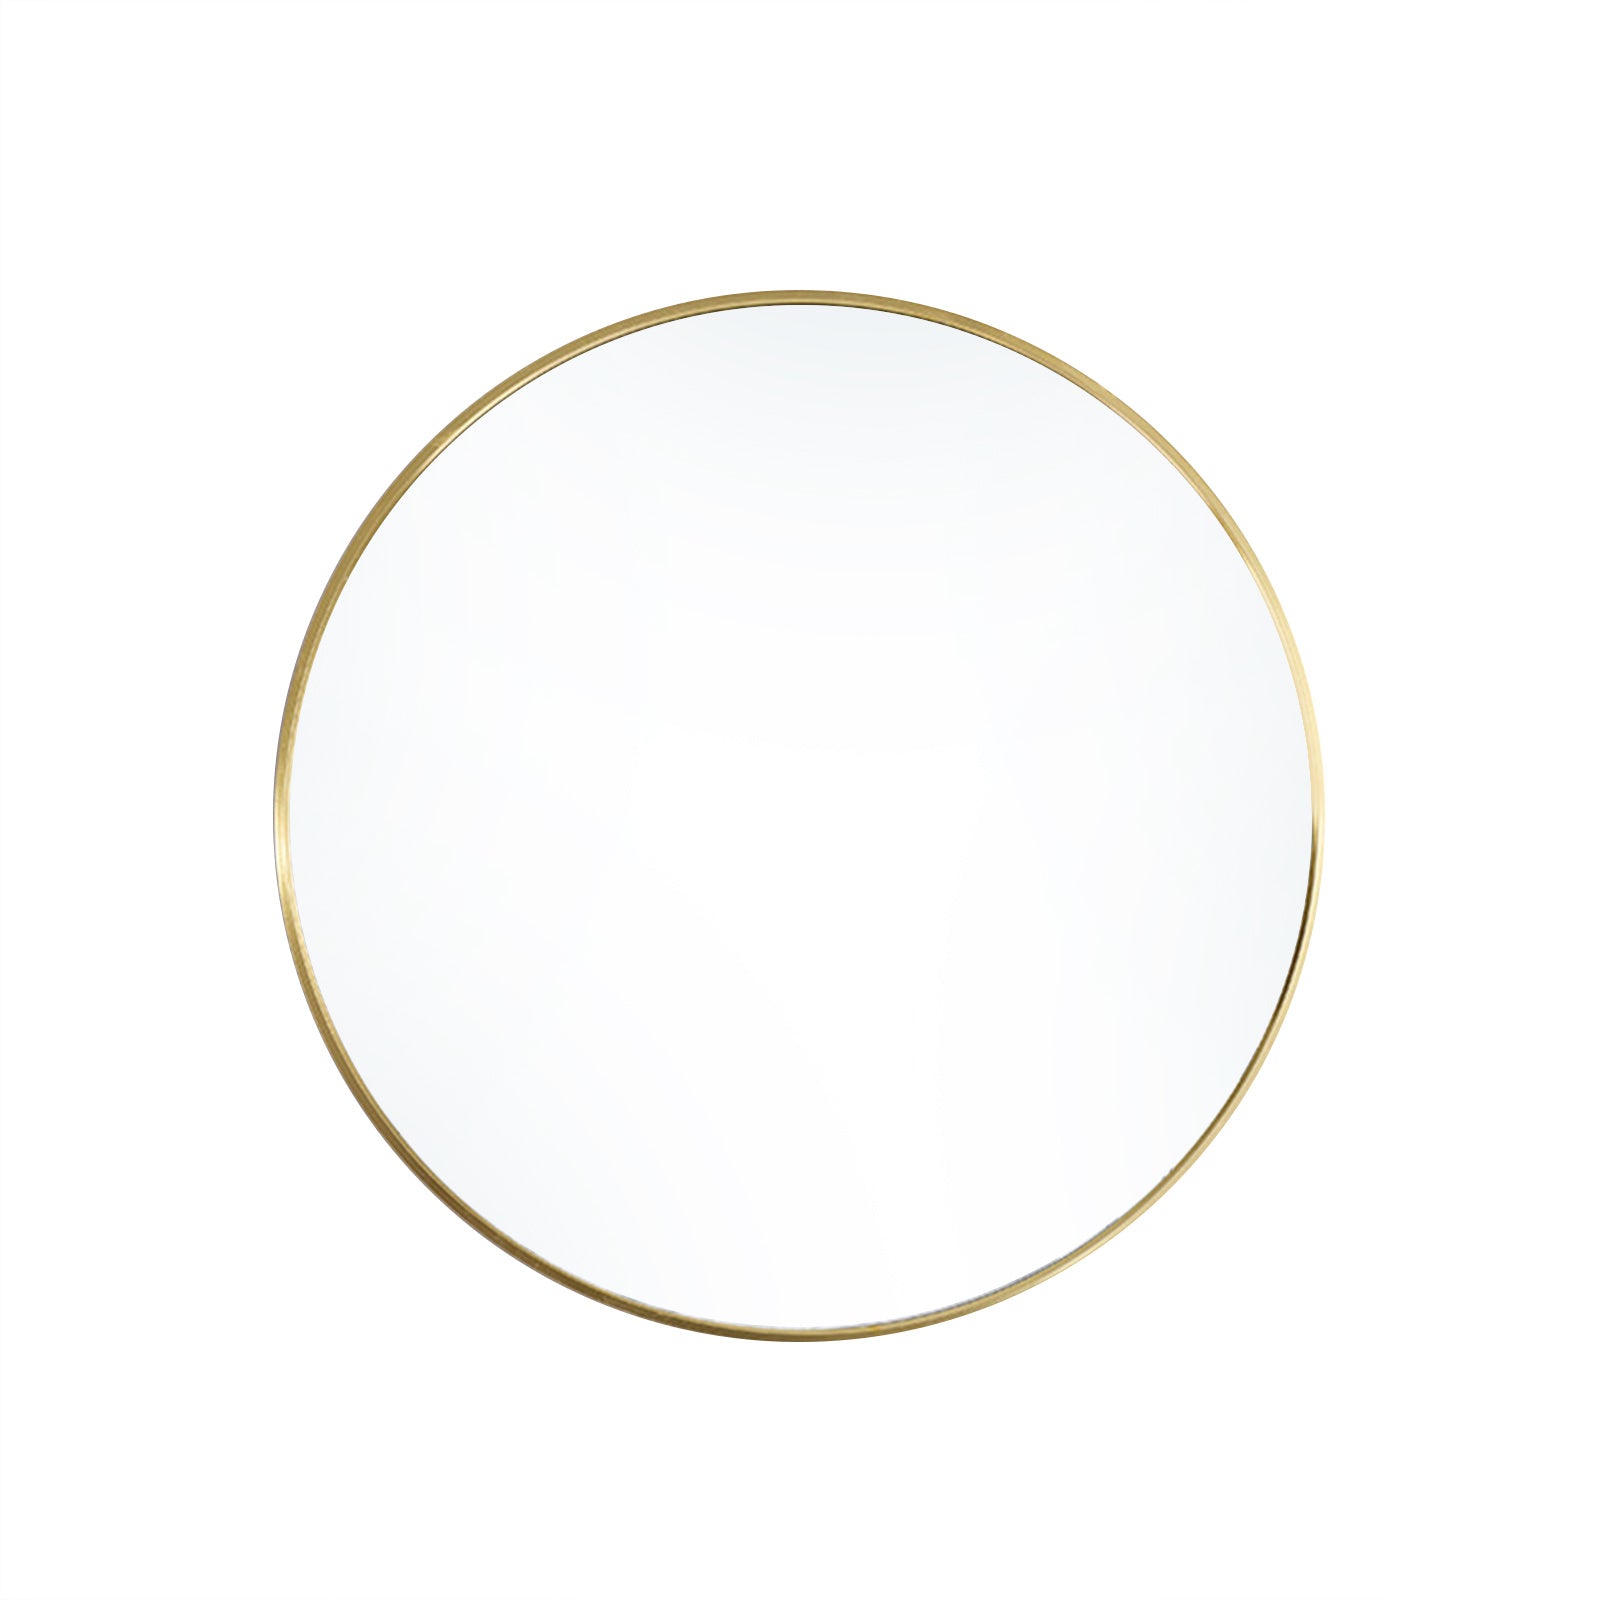 Dia 70cm Round Bathroom Mirror Gold Nordic Mirror